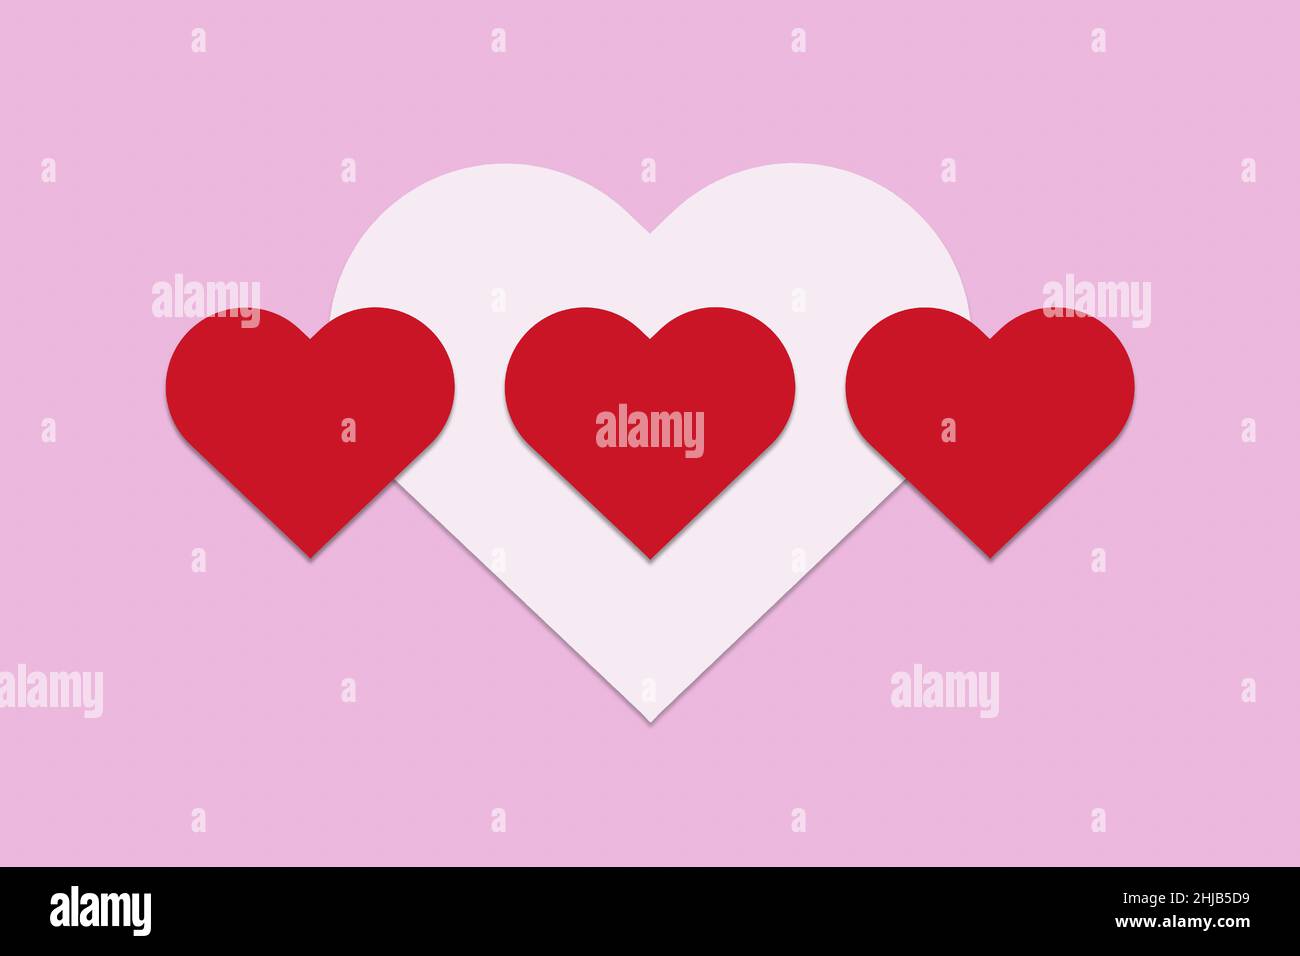 Hearts illustration on pink background. Stock Photo